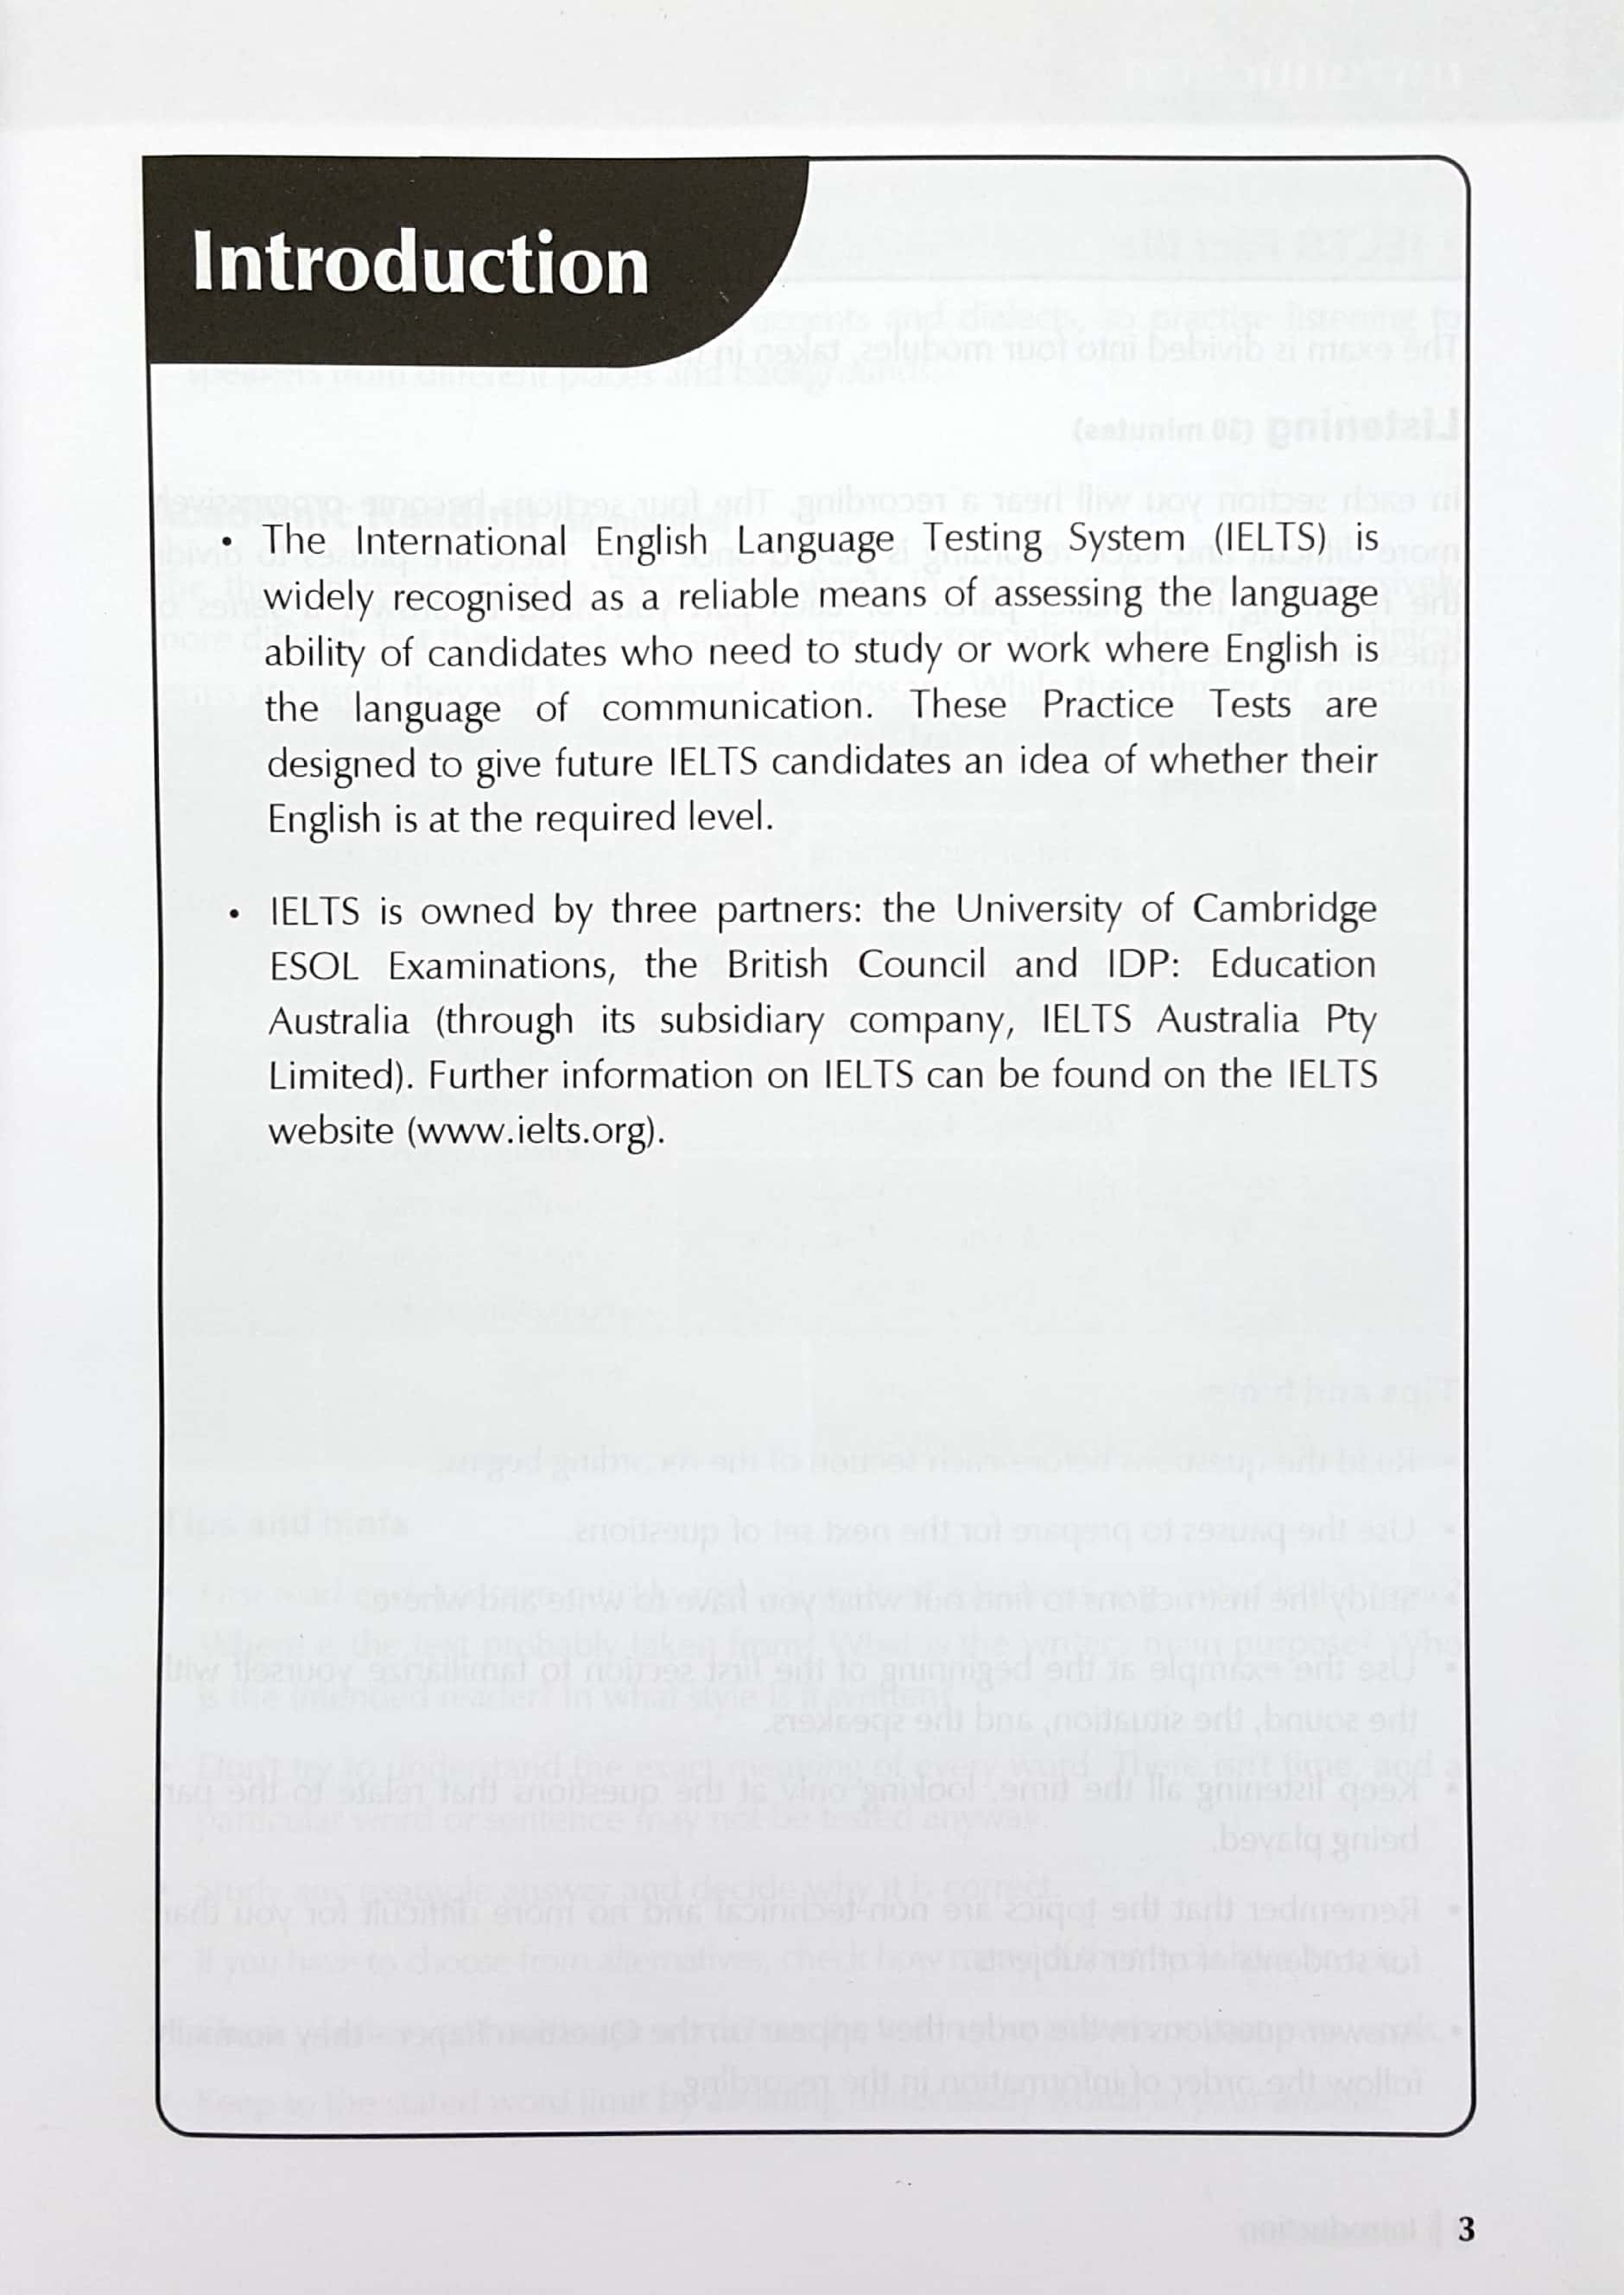 Expert On Cambridge Ielts Practice Tests 8 Kèm Cd PDF